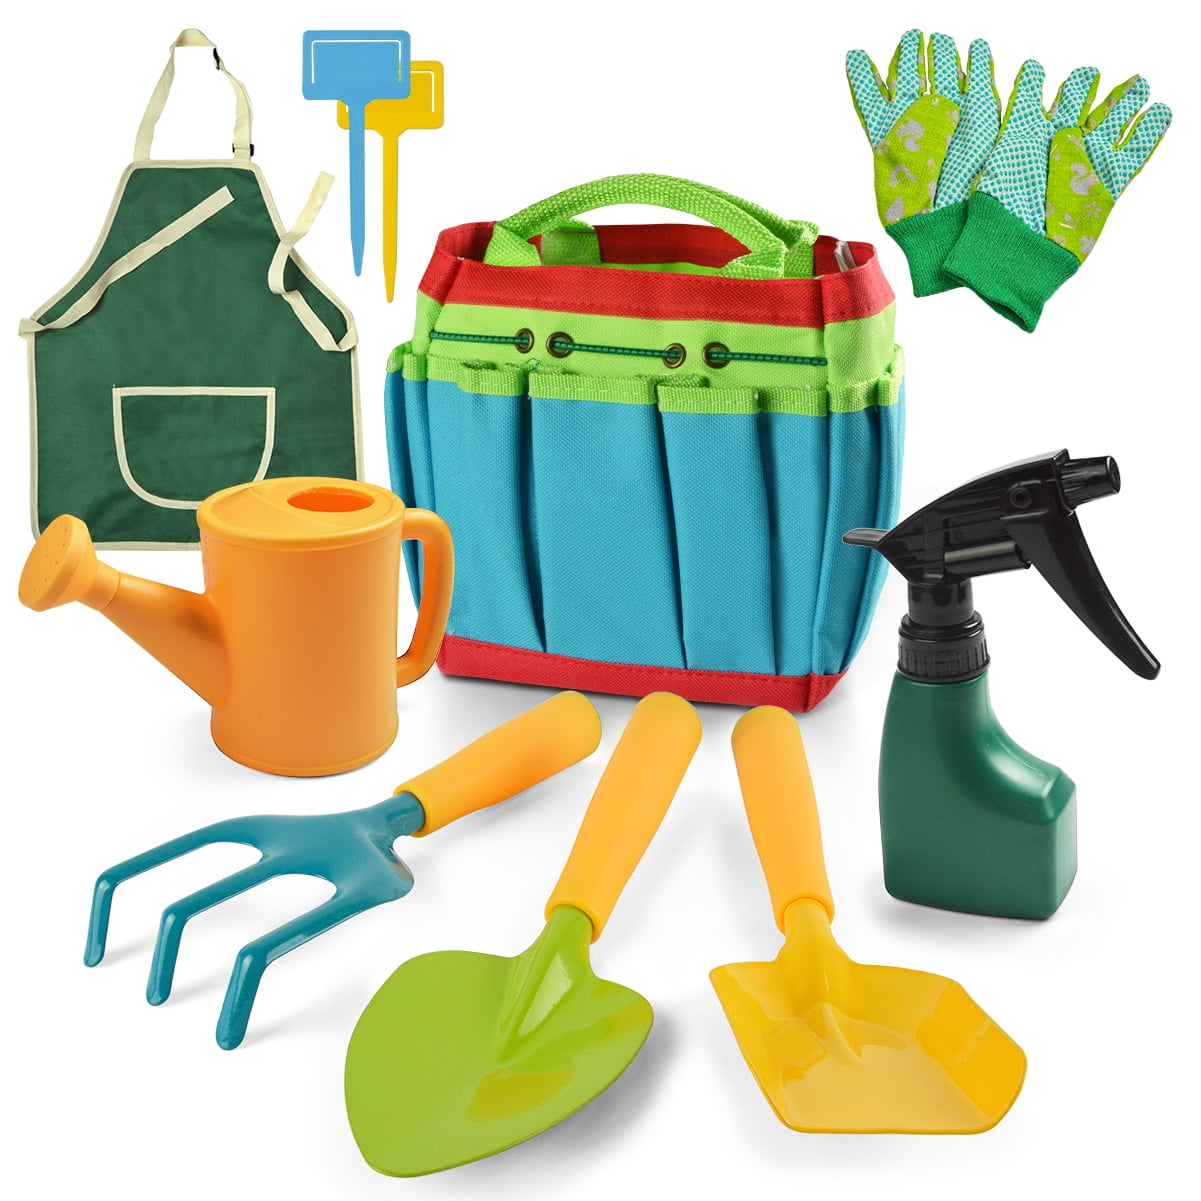 Play22USA Kids Garden Tool Set Toy 4-Piece - Shovel, Rake, Hoe 